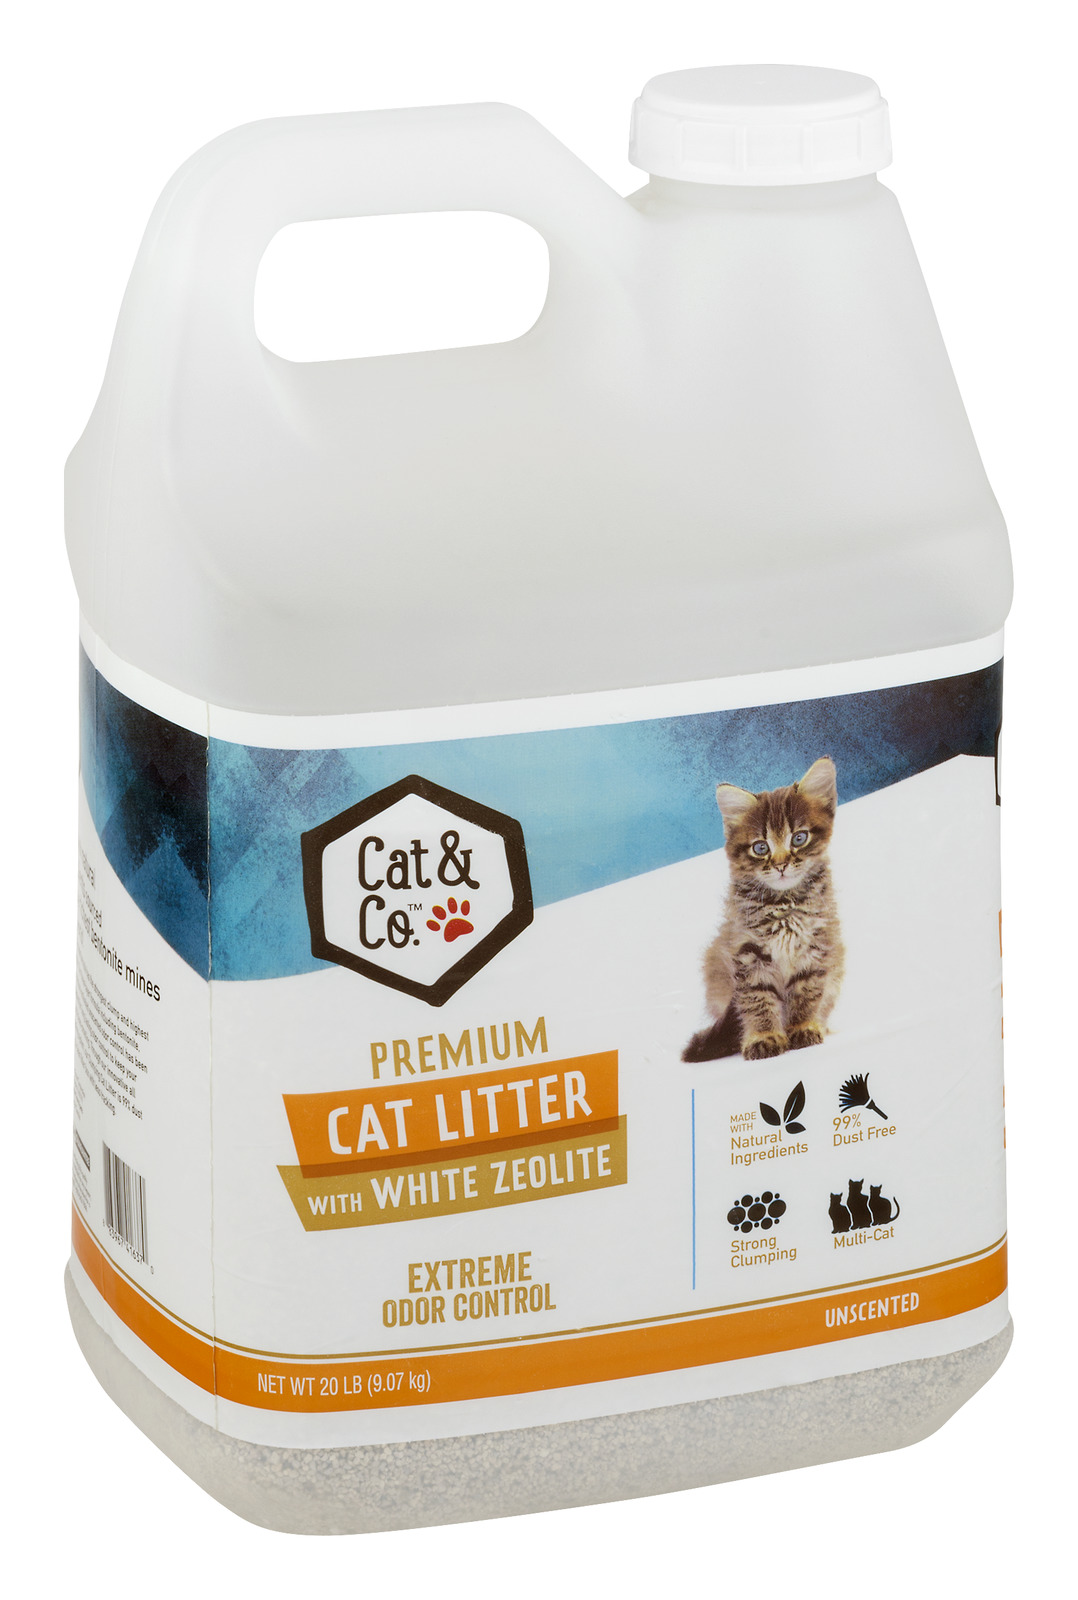 Cat & Co. 20lb. MultiCat Litter with White Zeolite, Unscented Shop